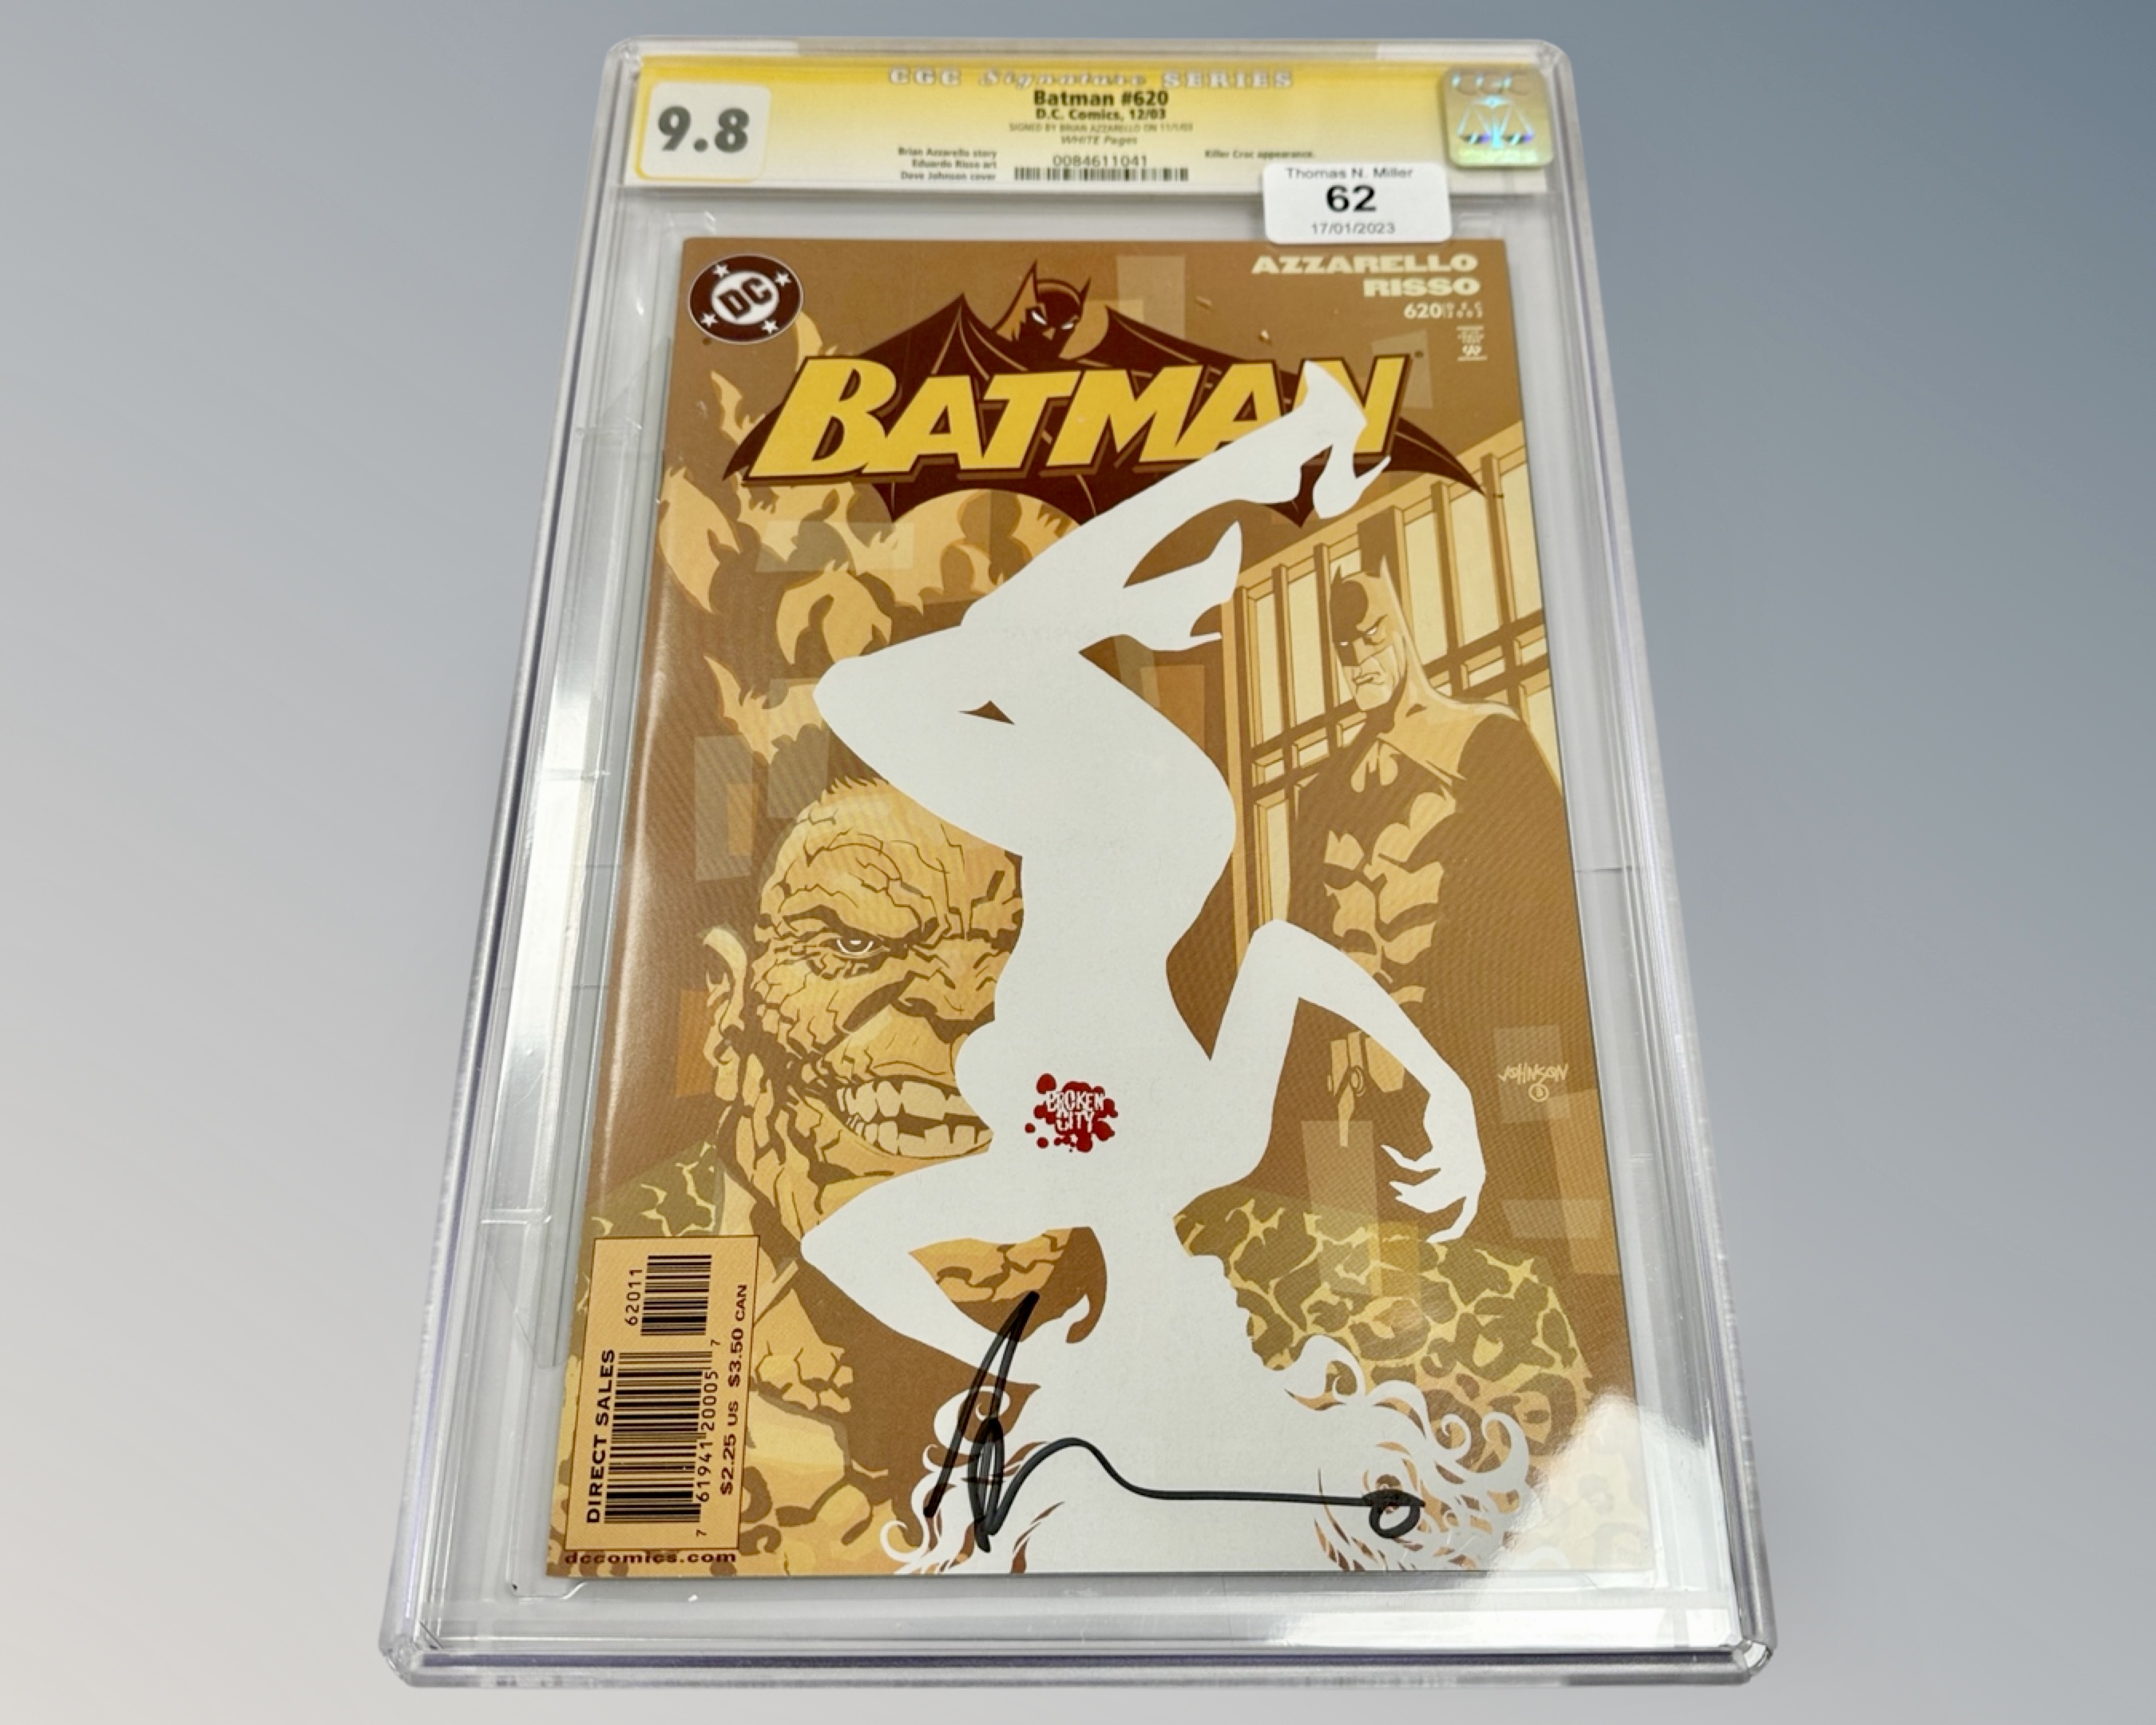 DC Comics : CGC Signature Series Batman #620, signed by Brian Azzarello, slabbed and graded 9.8.